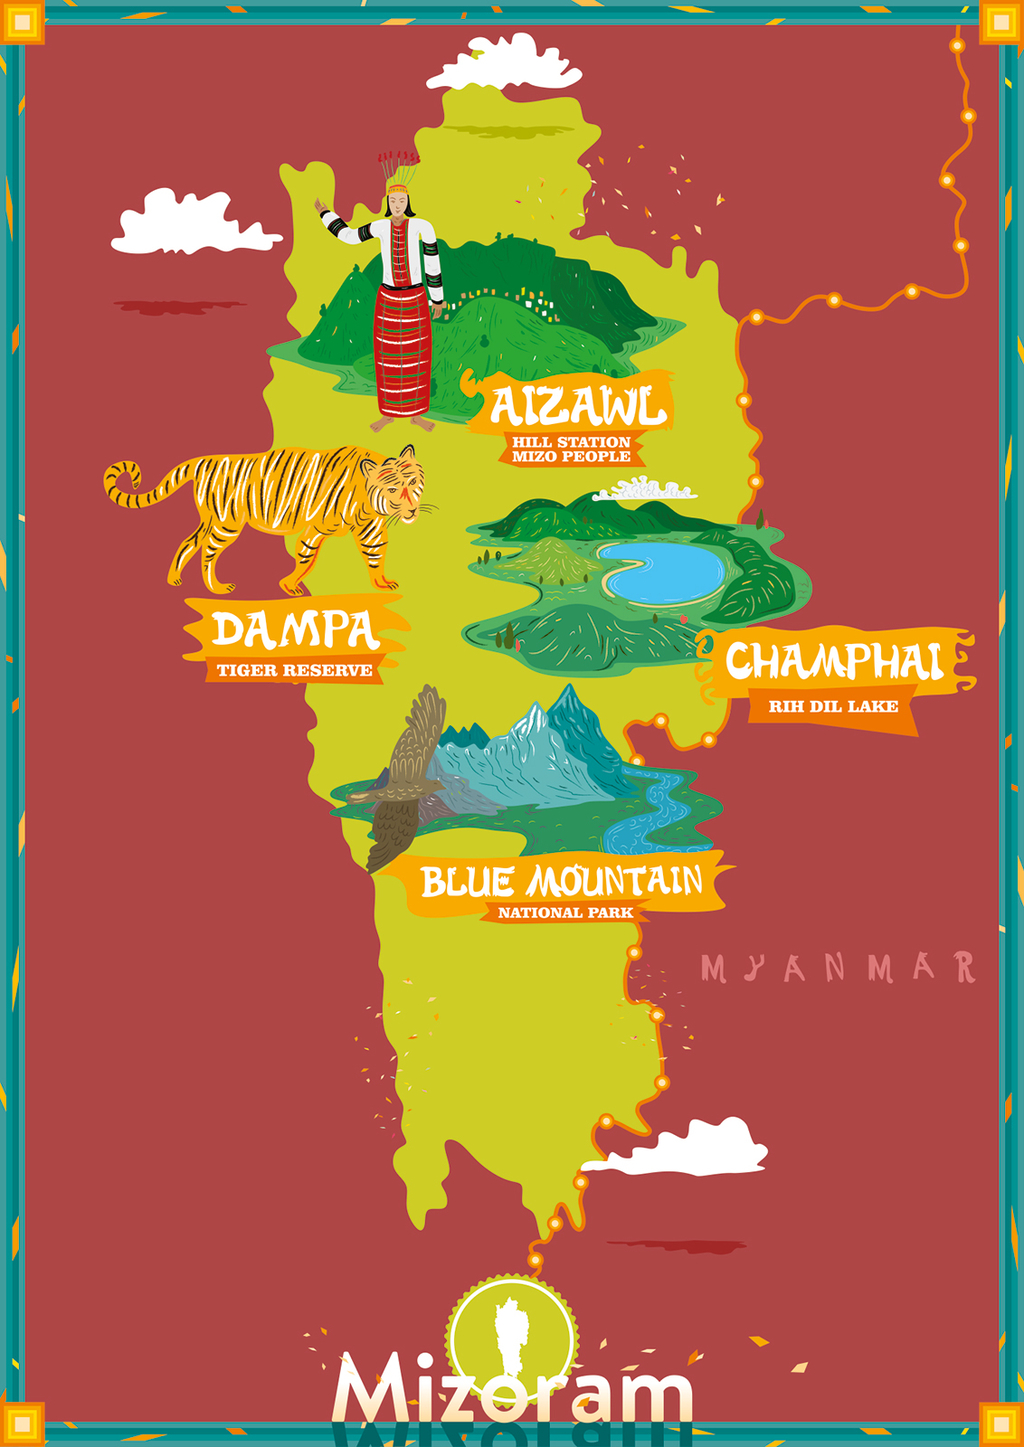 Mizoram states